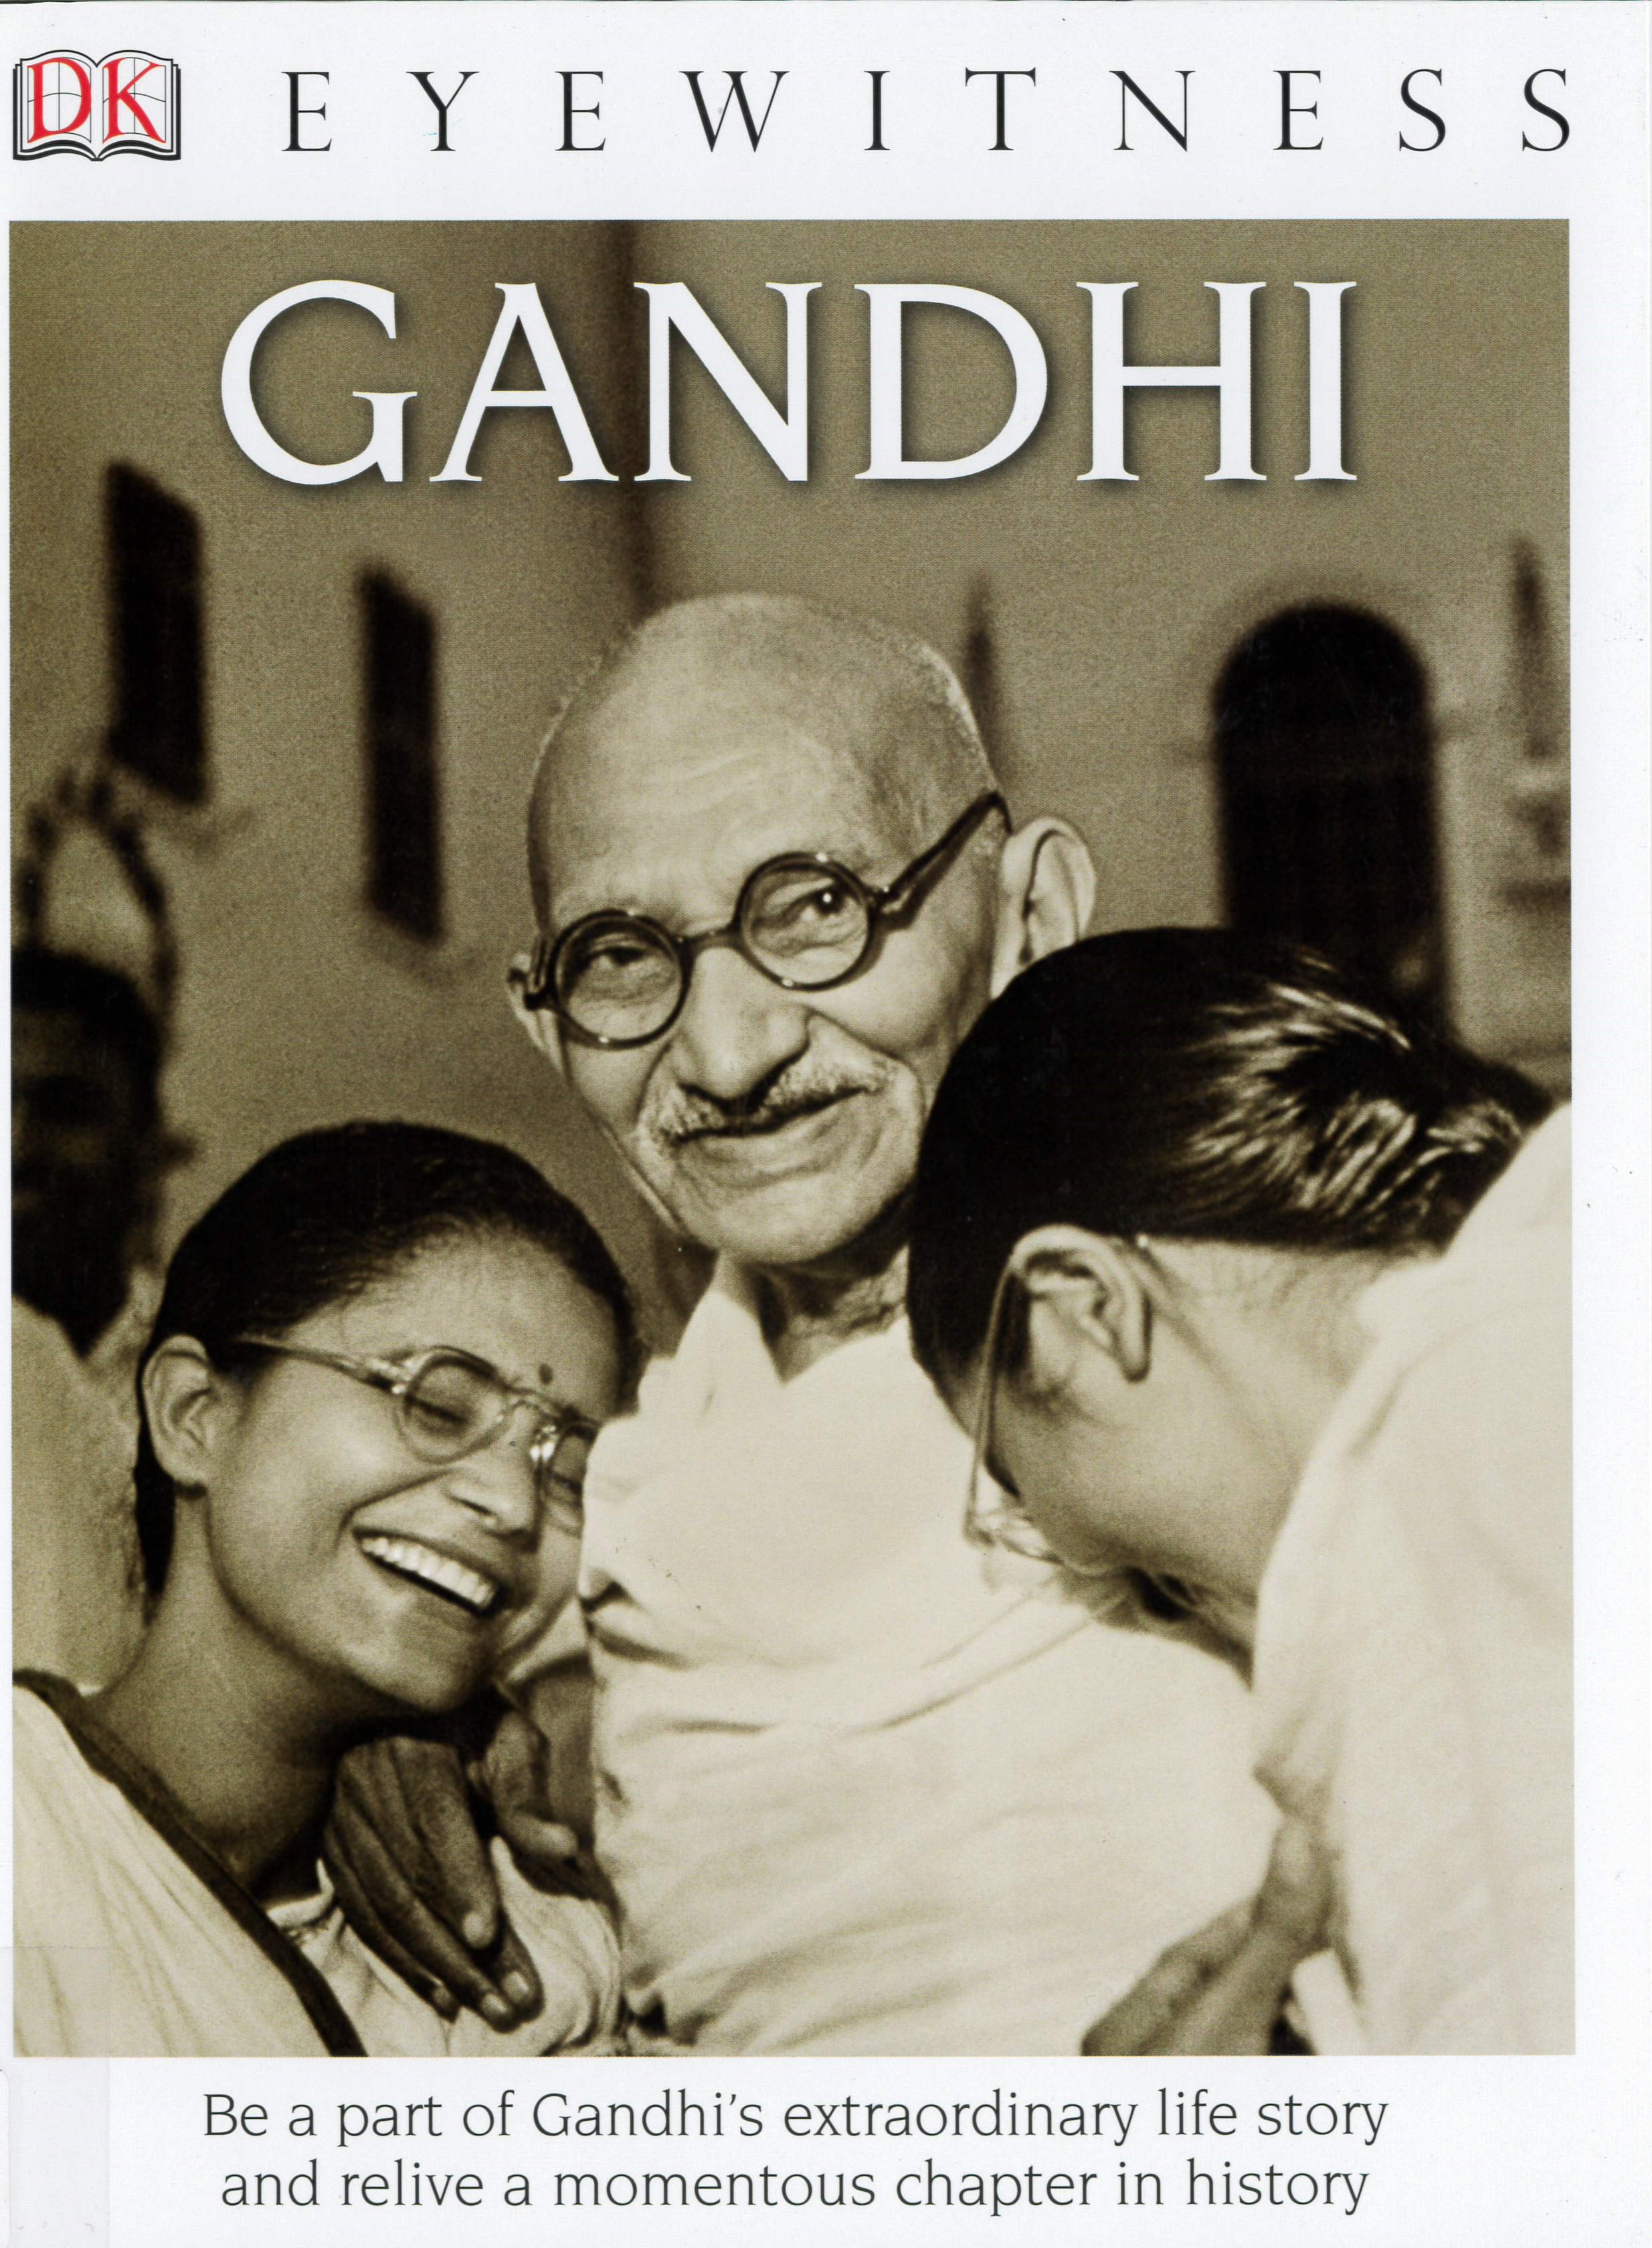 Gandhi /